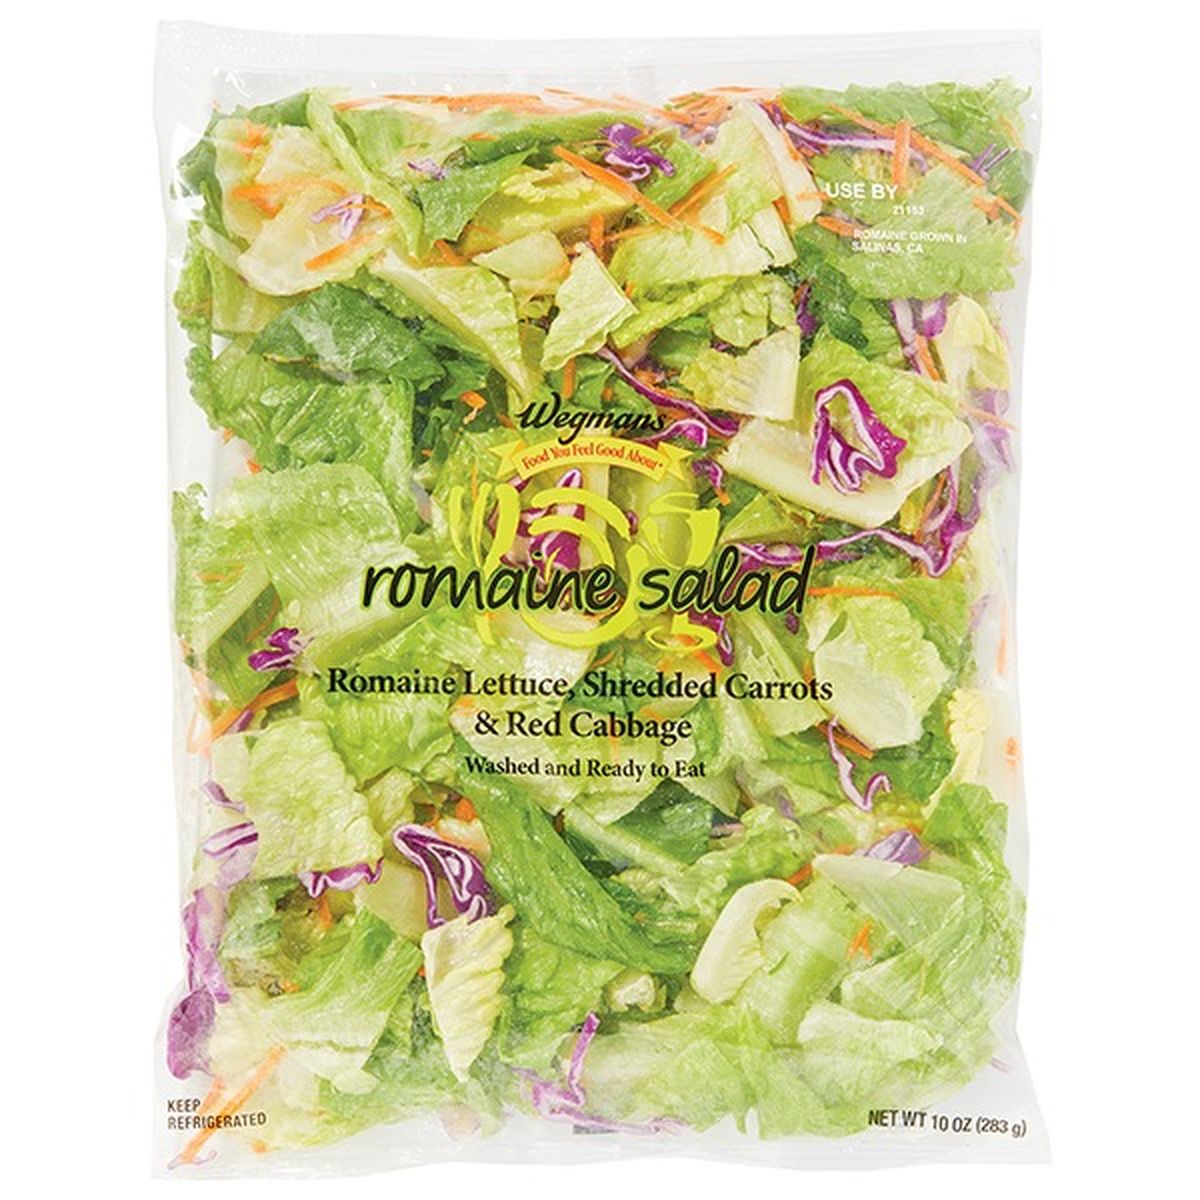 Calories in Wegmans Romaine Salad